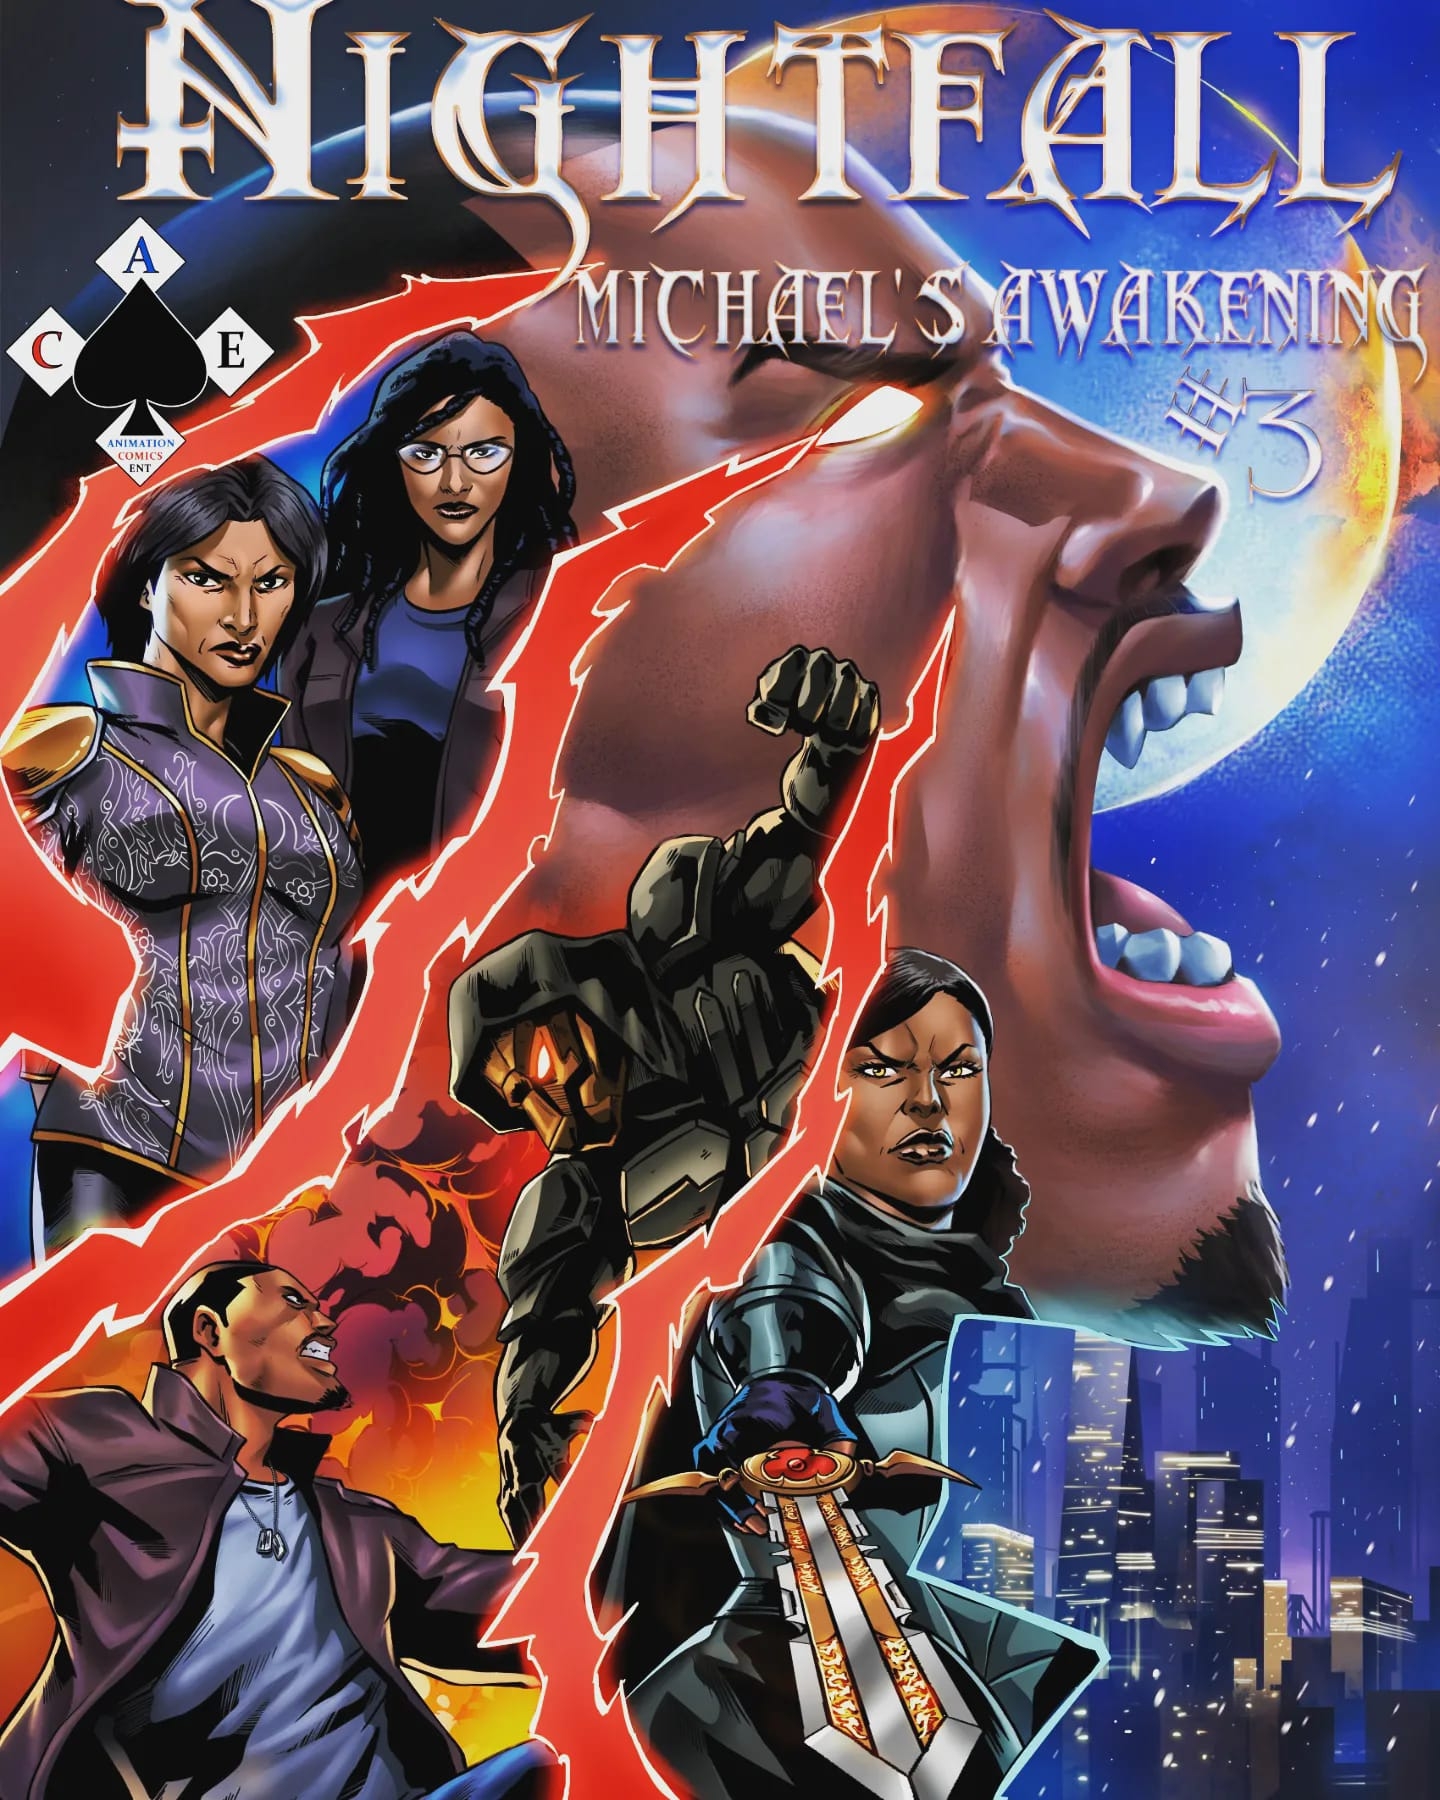 NOW THIS: Nightfall: Michael’s Awakening seriesNOW THIS: